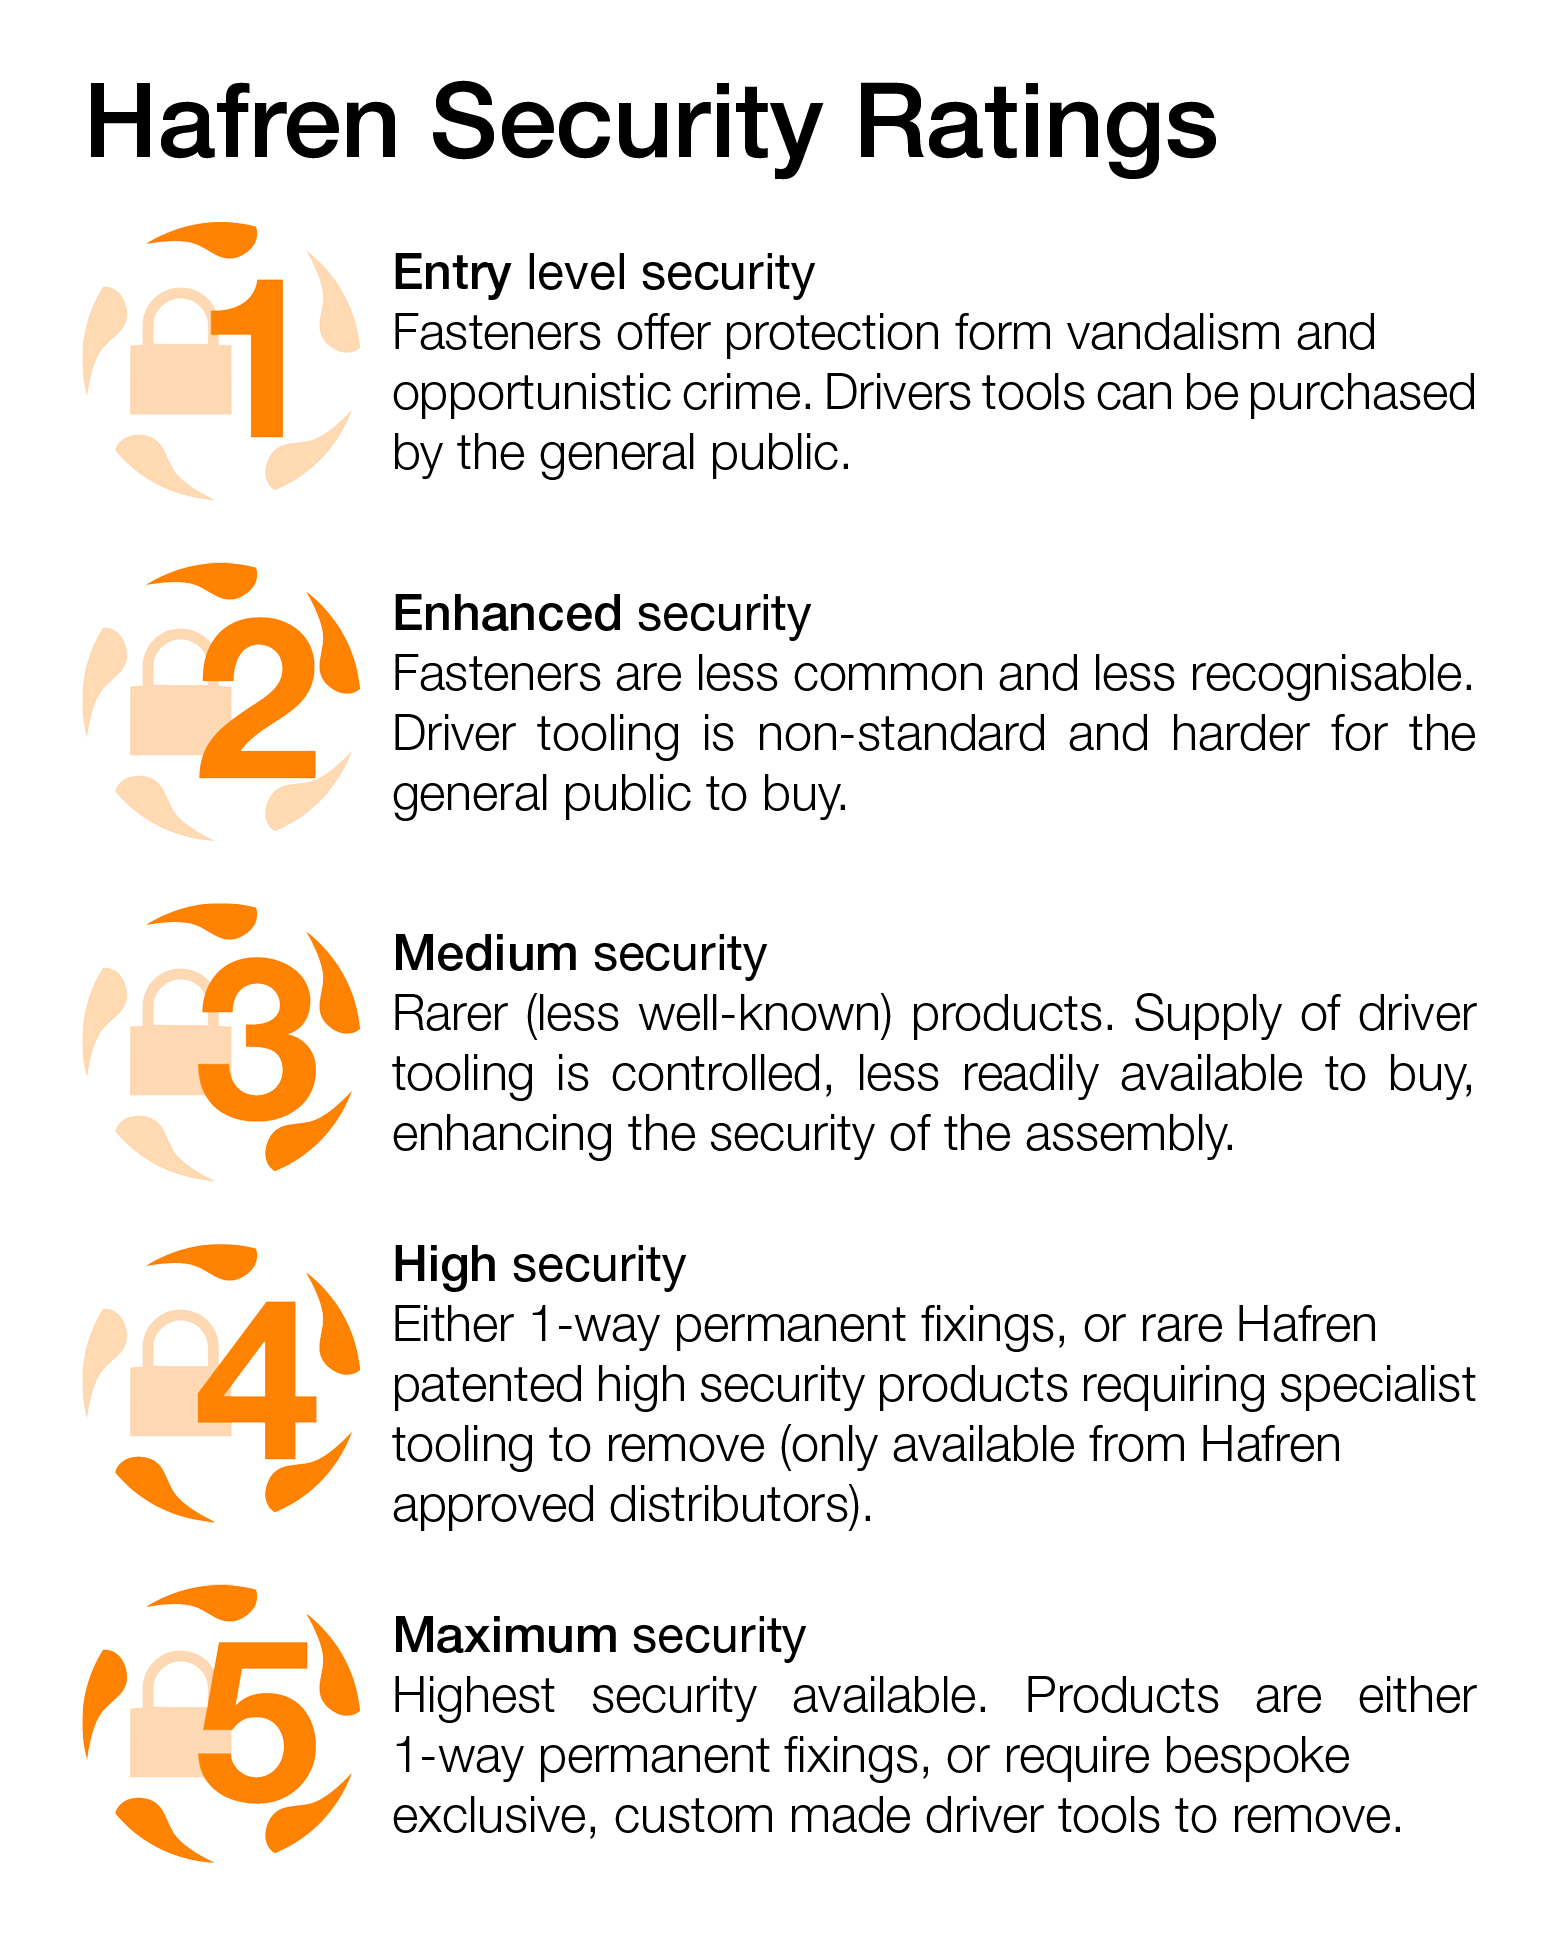 Hafren Security Fastener Ratings Explained (part 5)